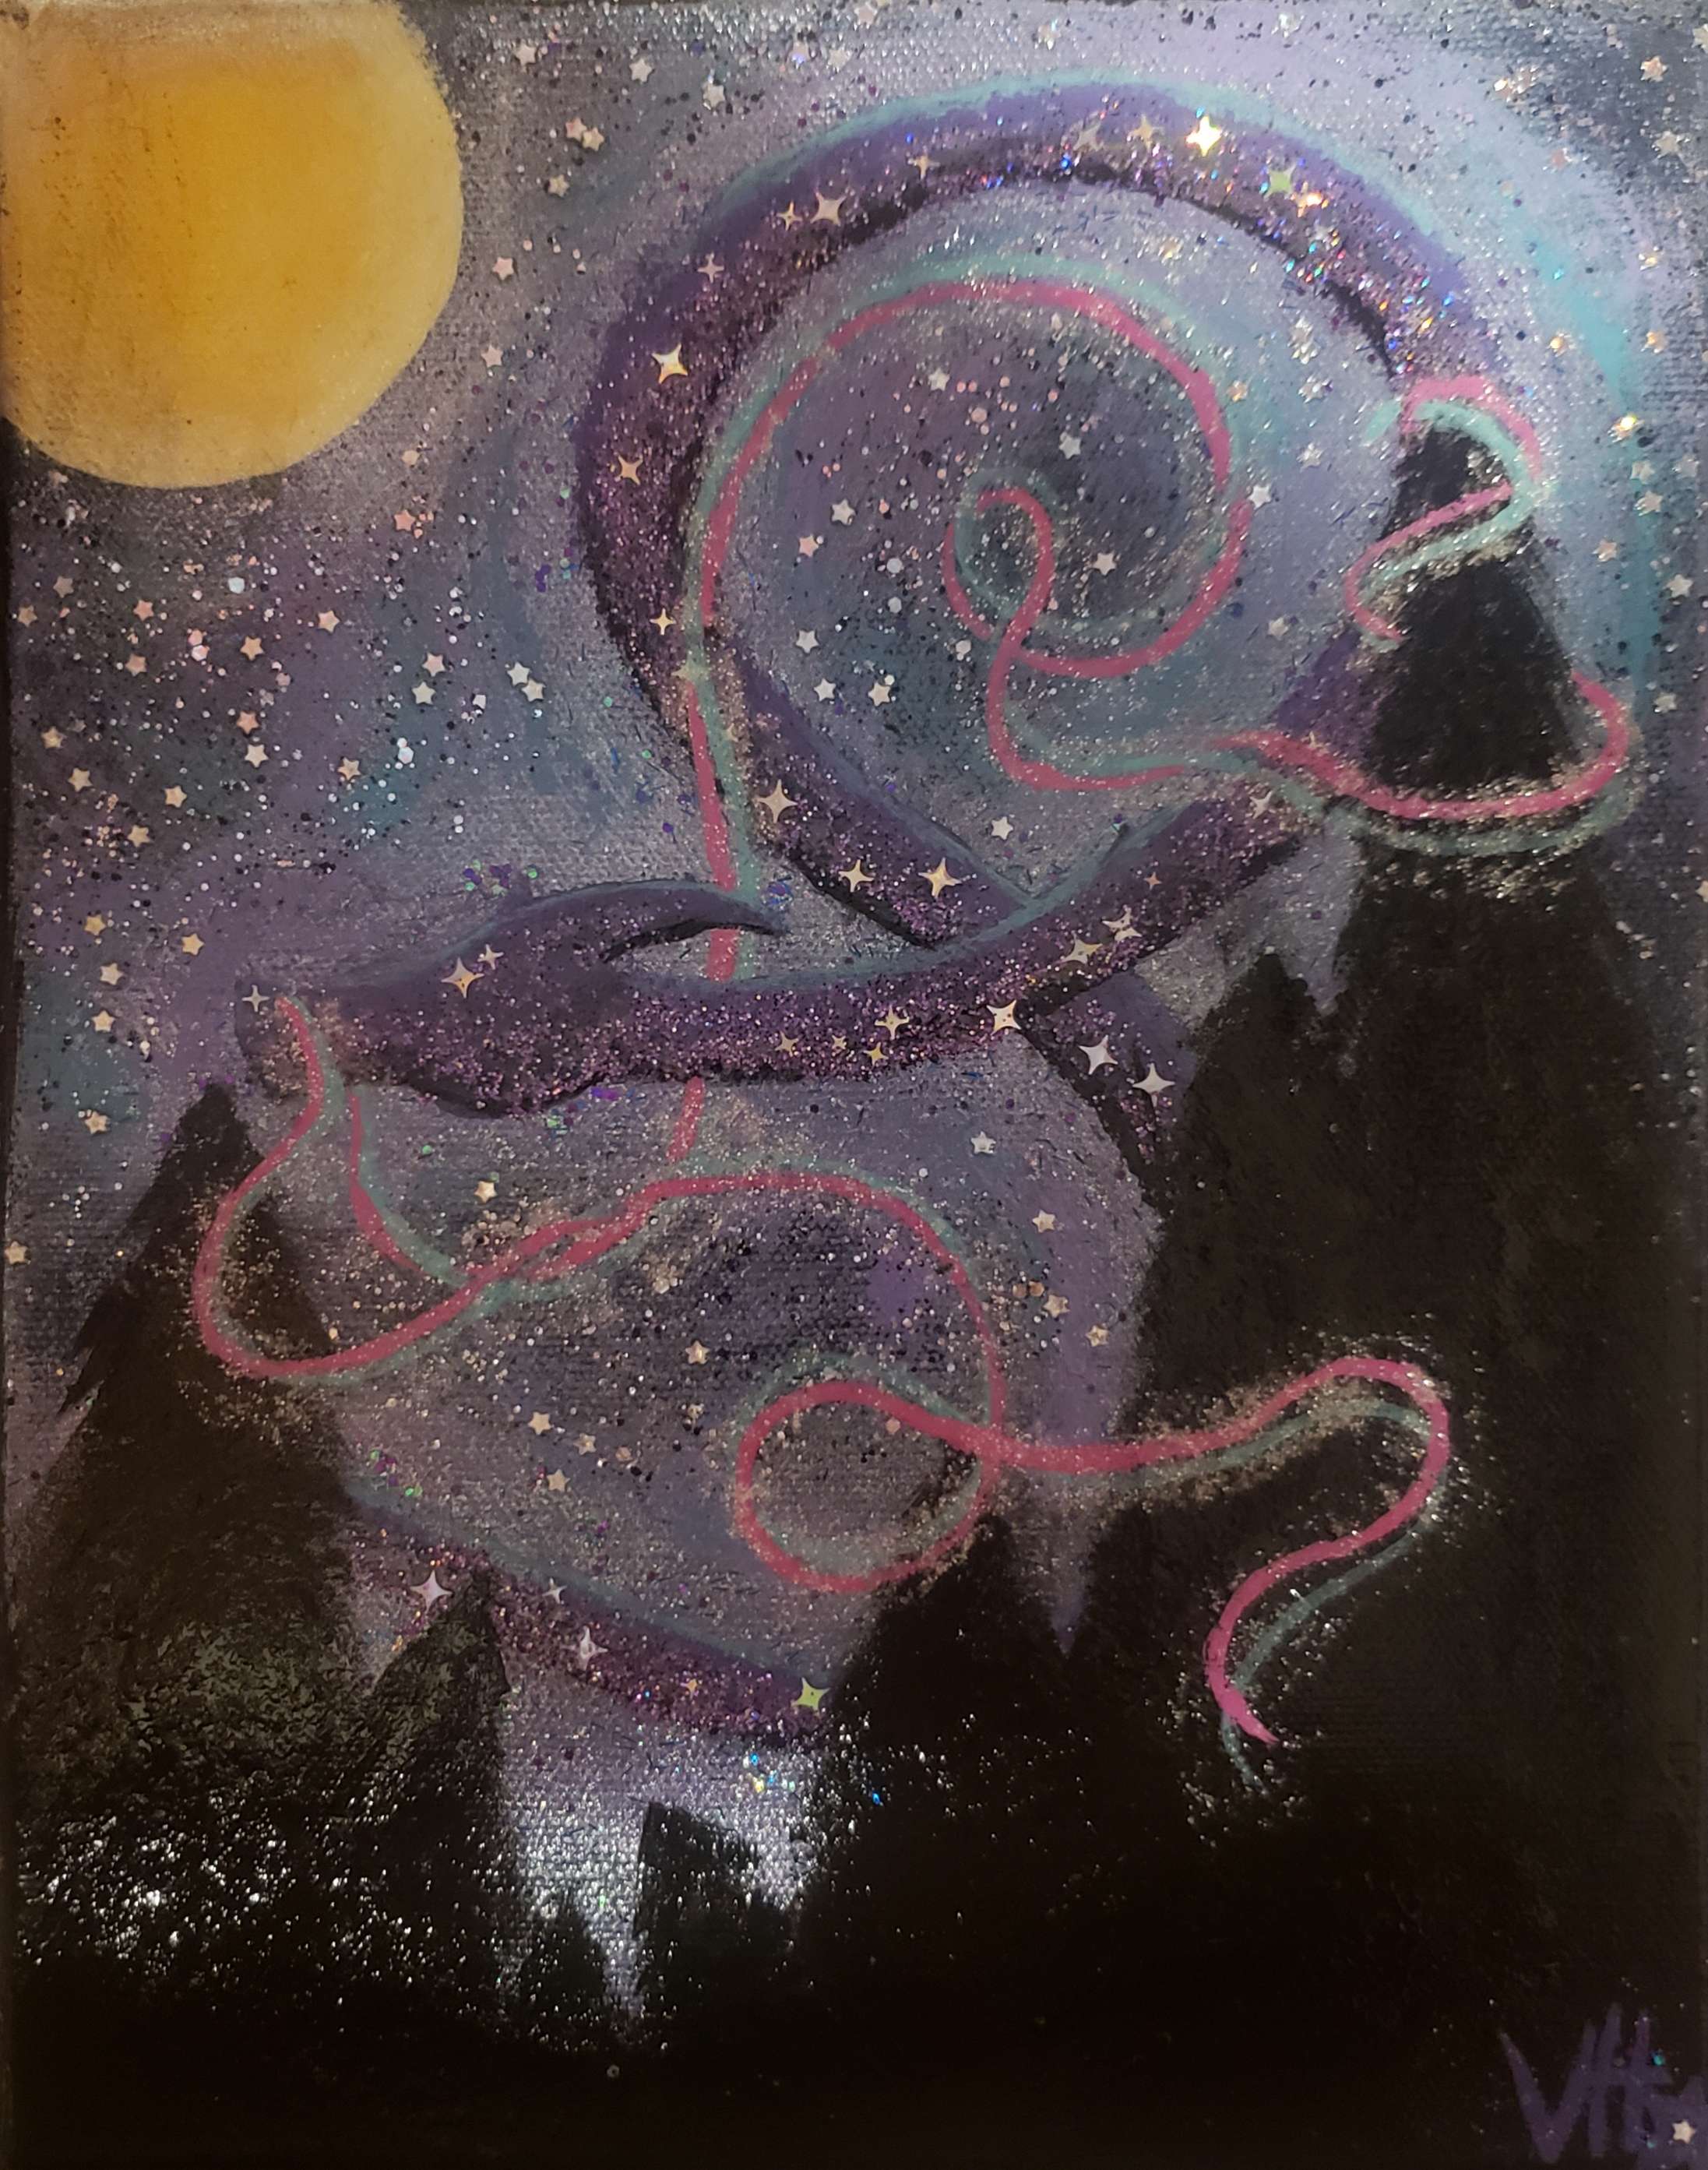 Star Dragon, acrylic and glitter on canvas